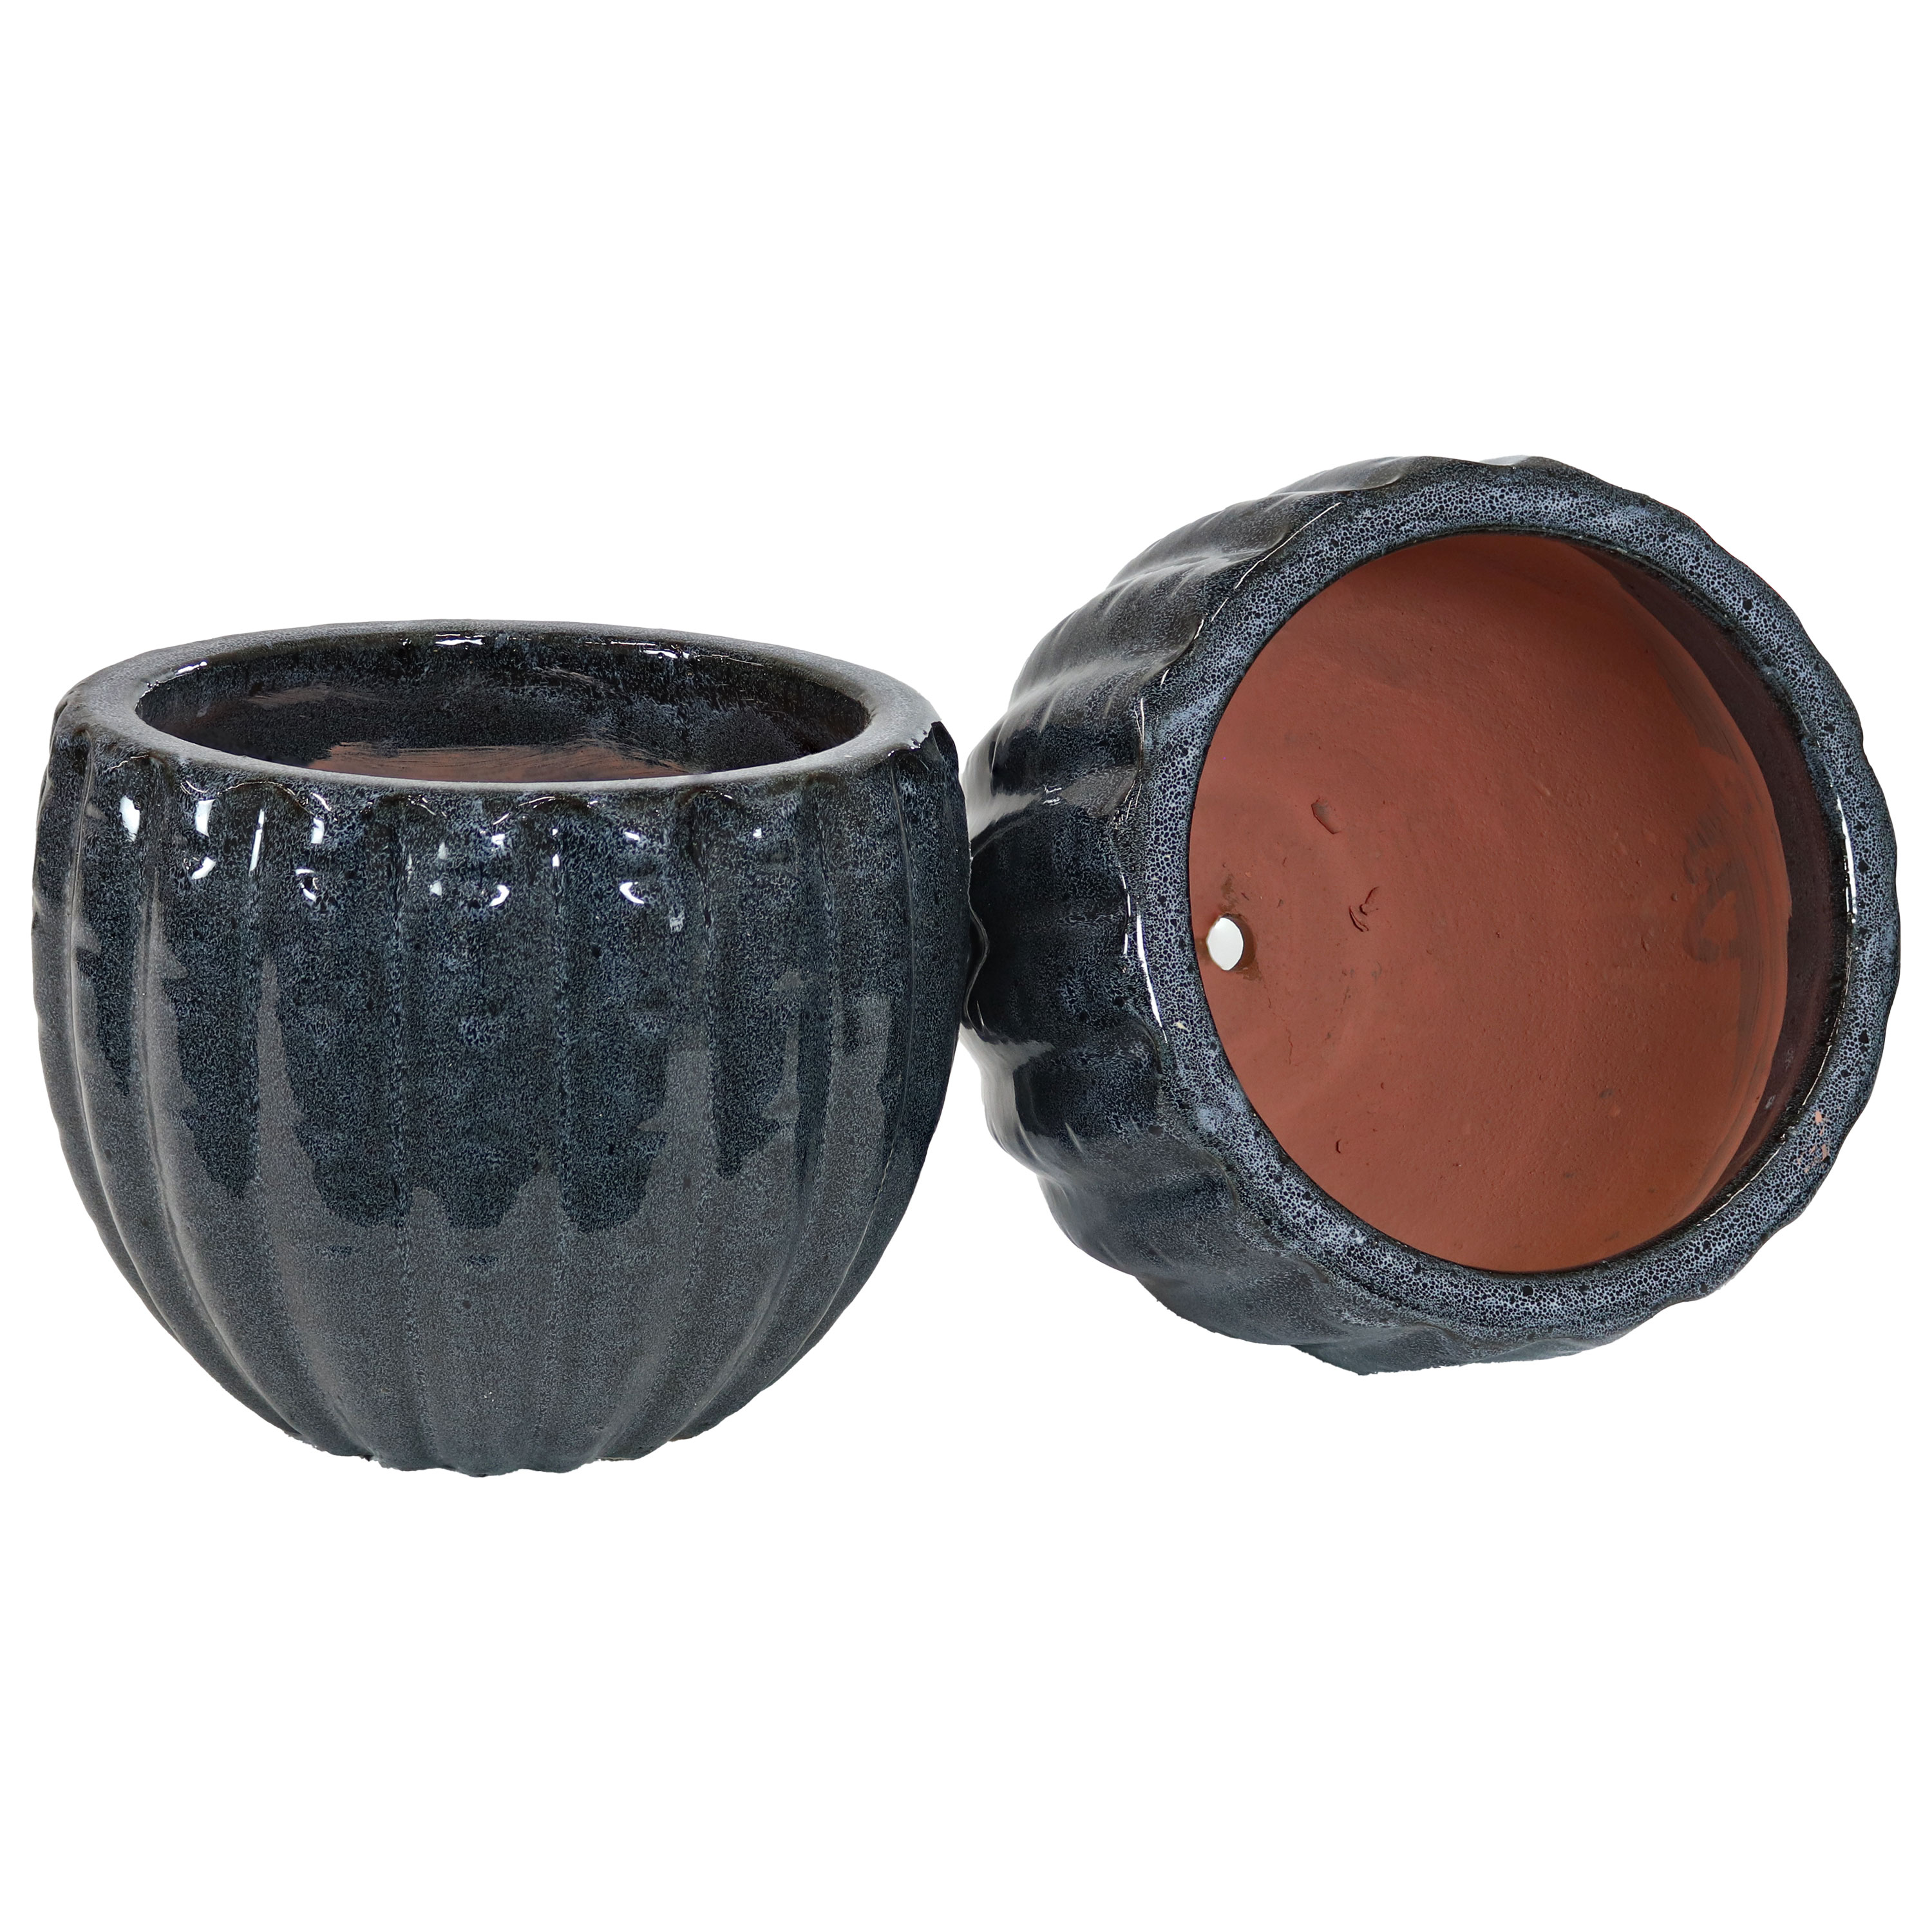 10" Fluted Ceramic Planter - Black Mist - 2-Pack